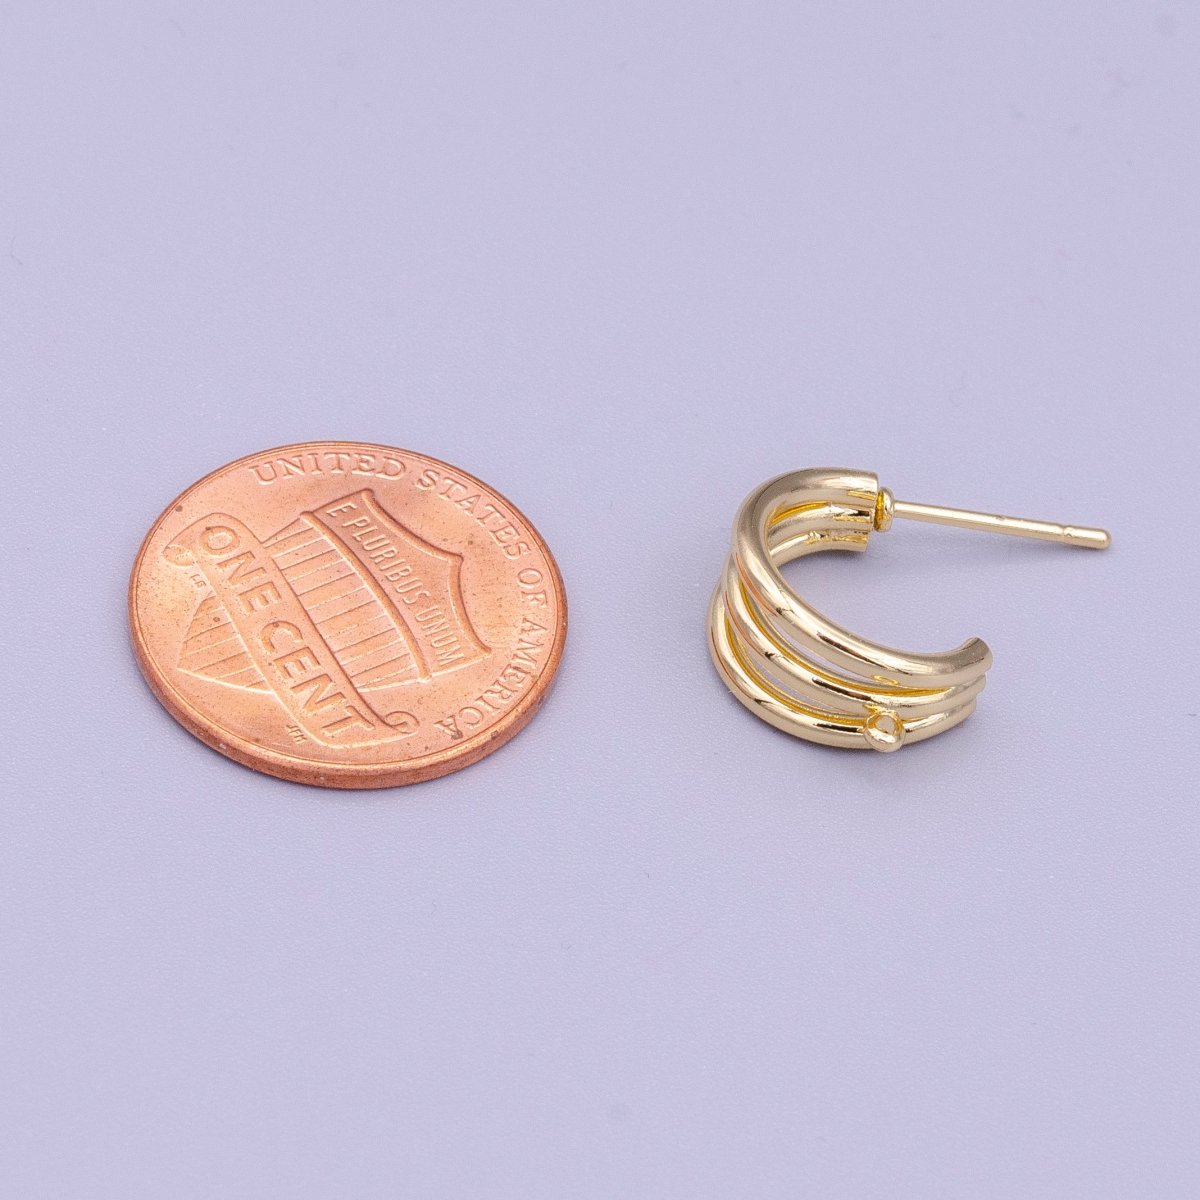 16K Gold Filled Triple Band Claw Open Loop C-Shaped Hoop Earrings Supply | Z-401 - DLUXCA